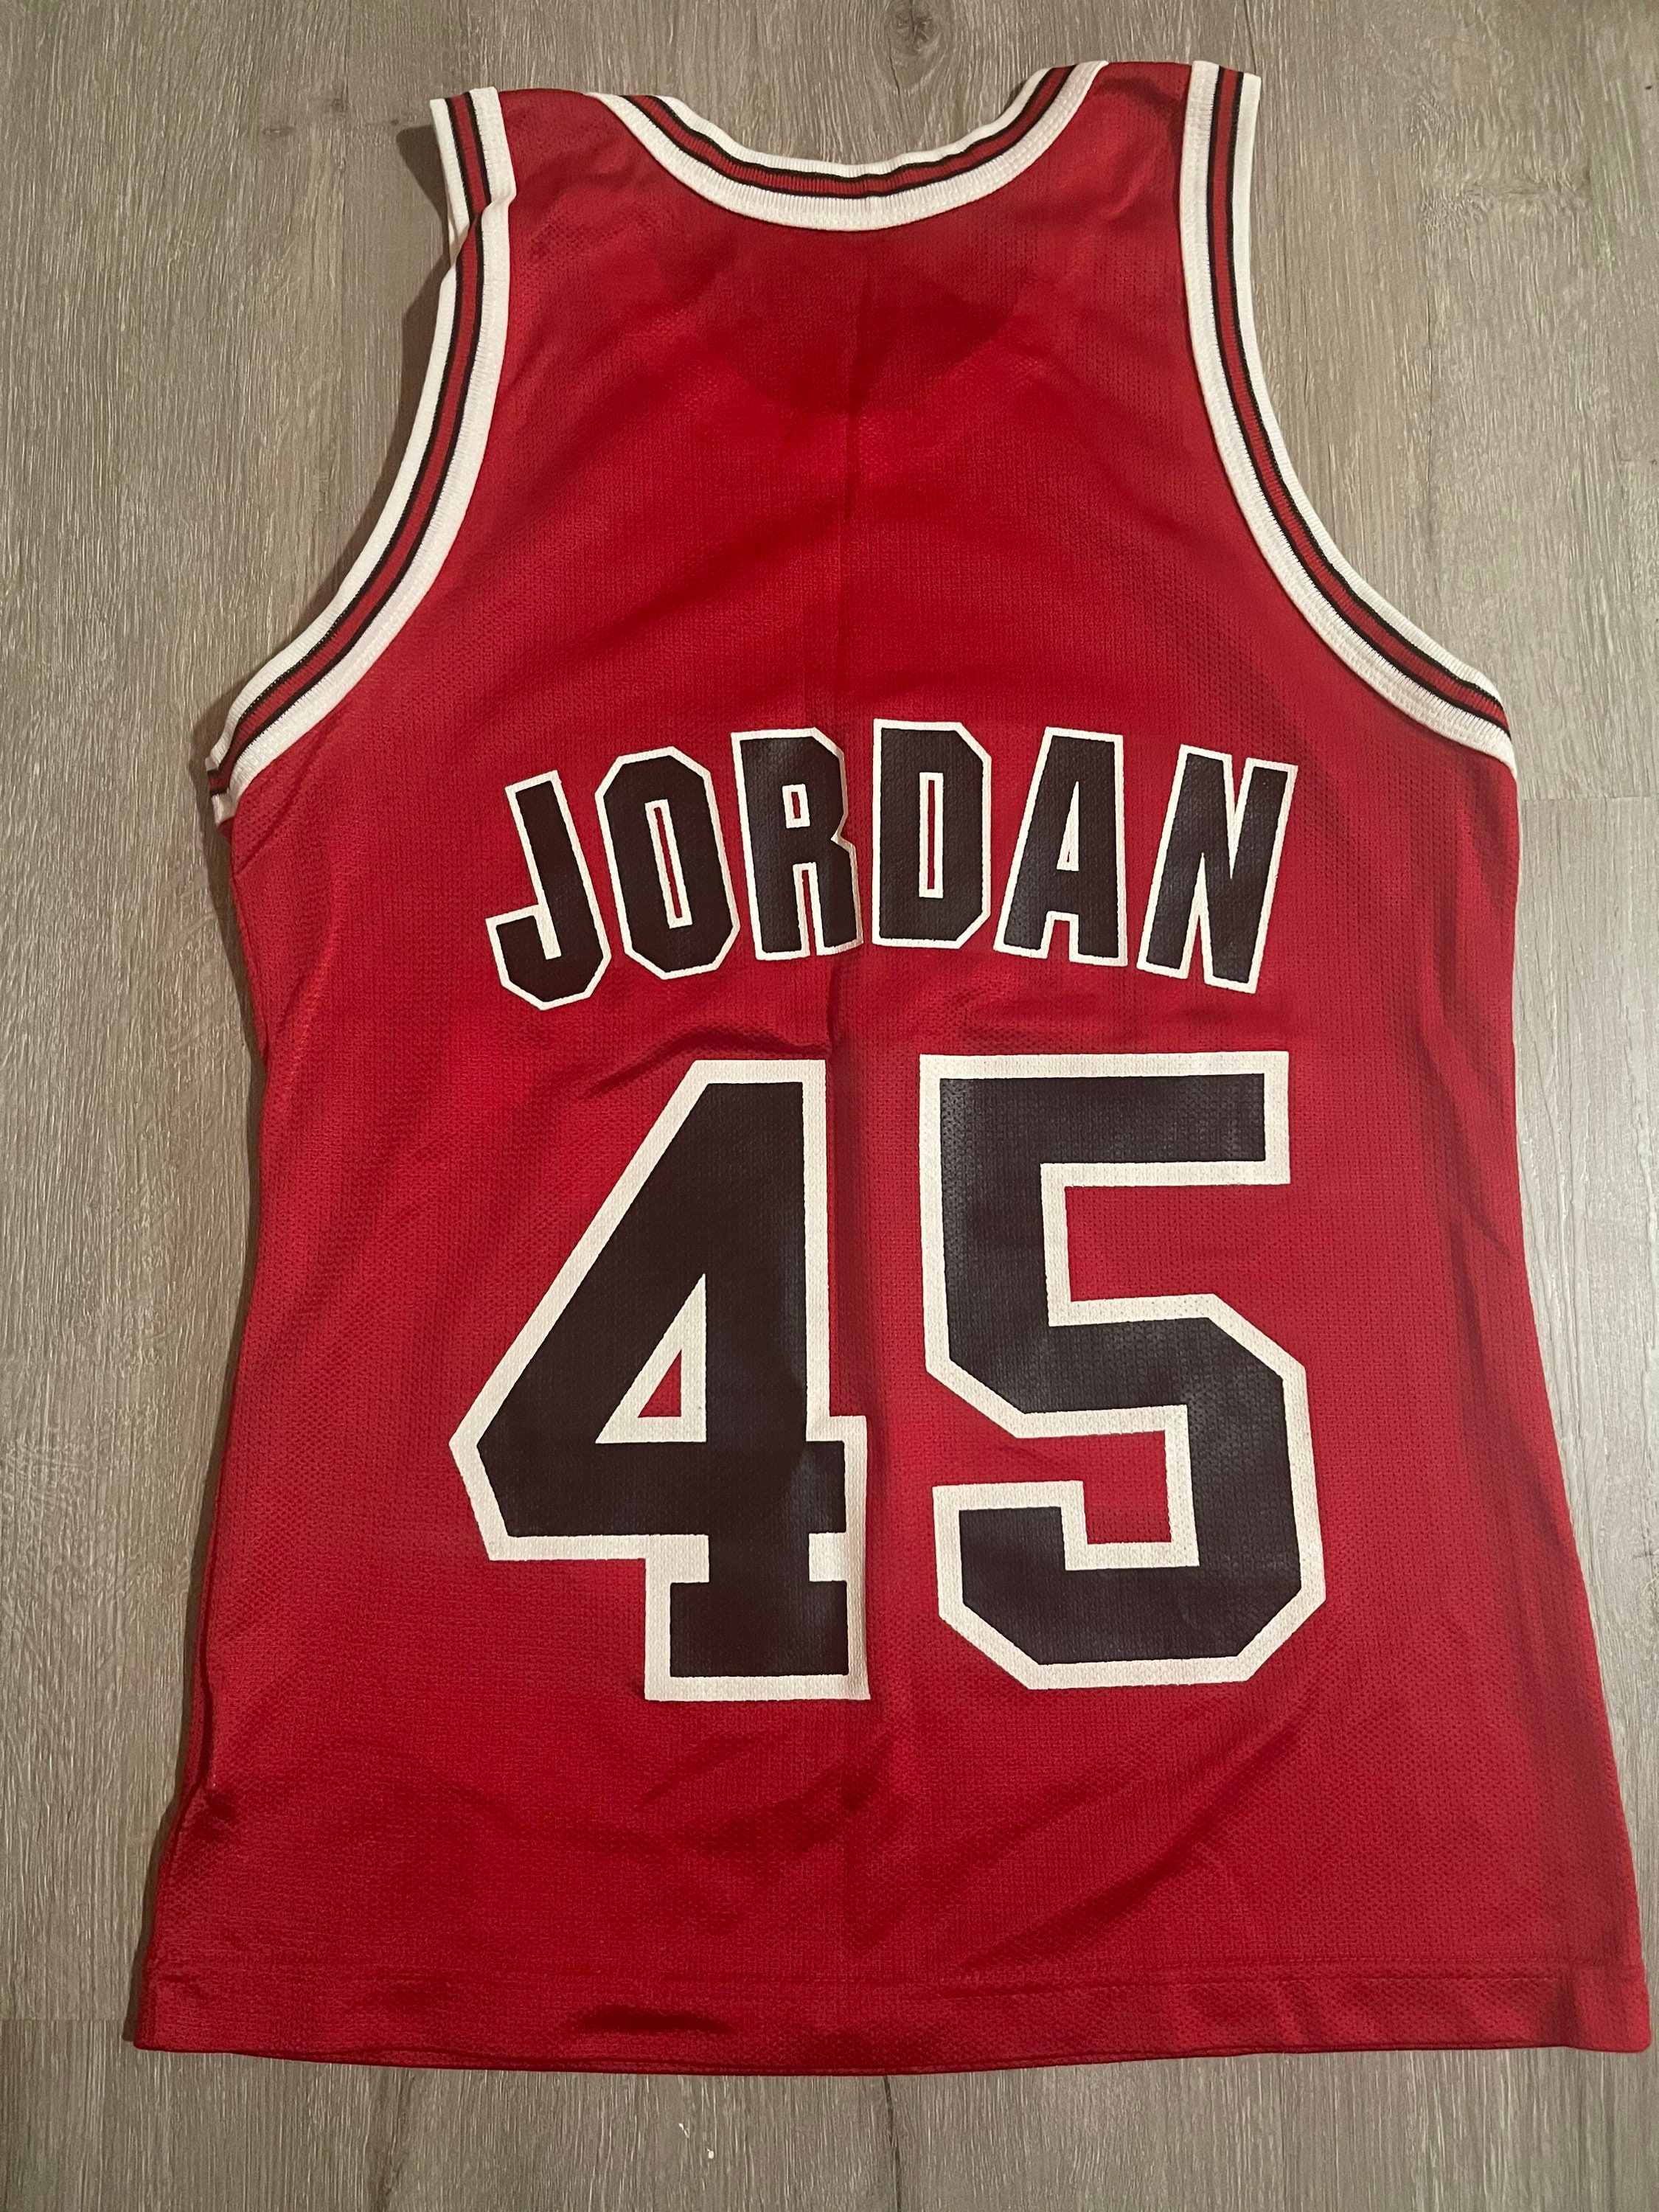 Michael Jordan Bulls #45 Rare Home Jersey XL